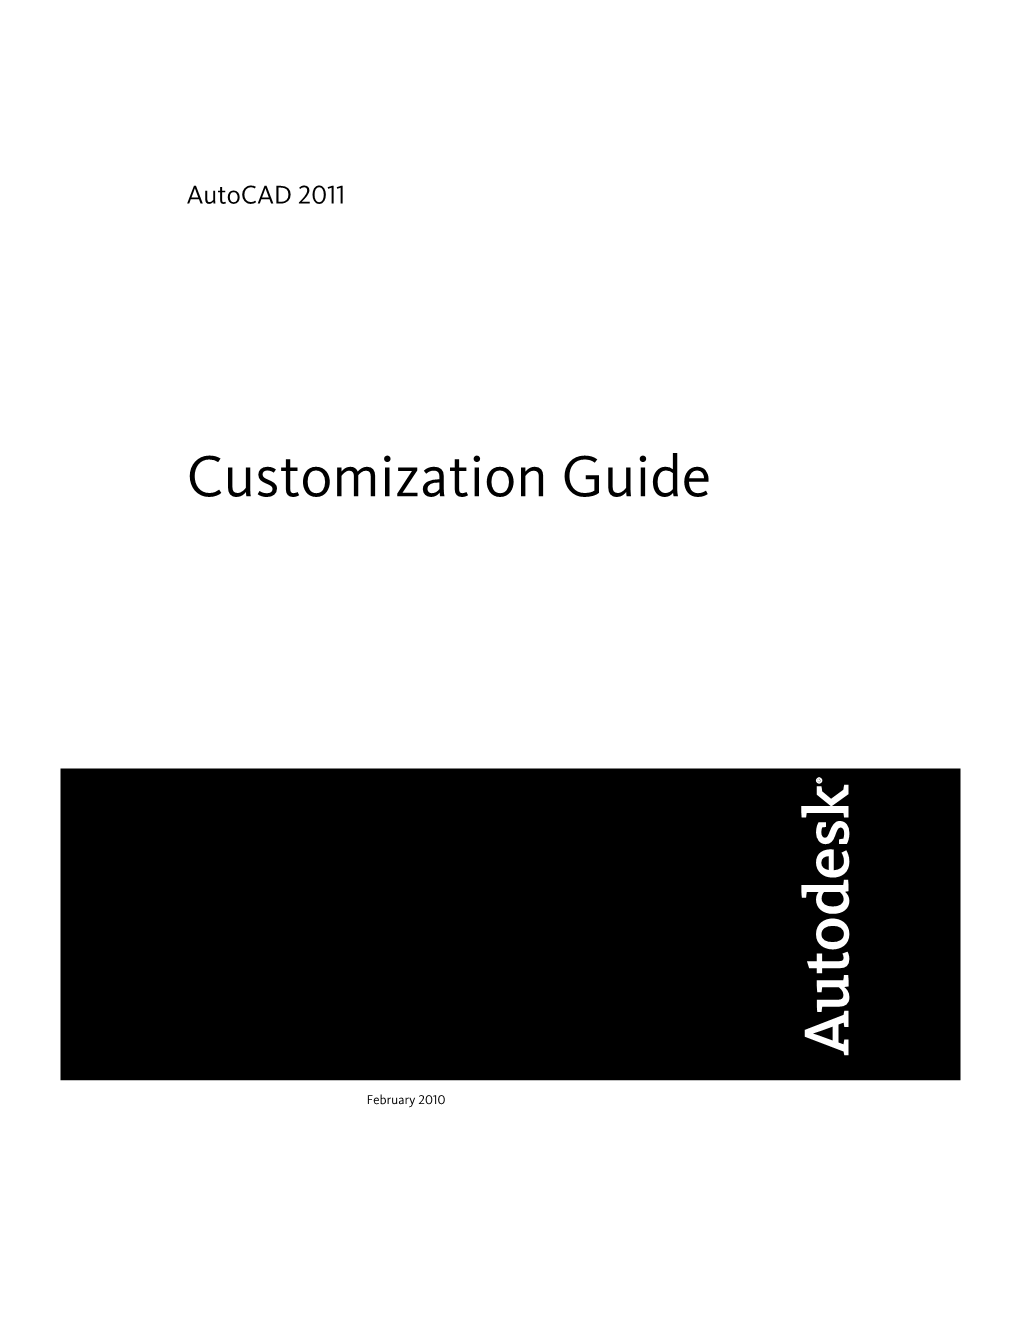 Autocad 2011 Customization Guide